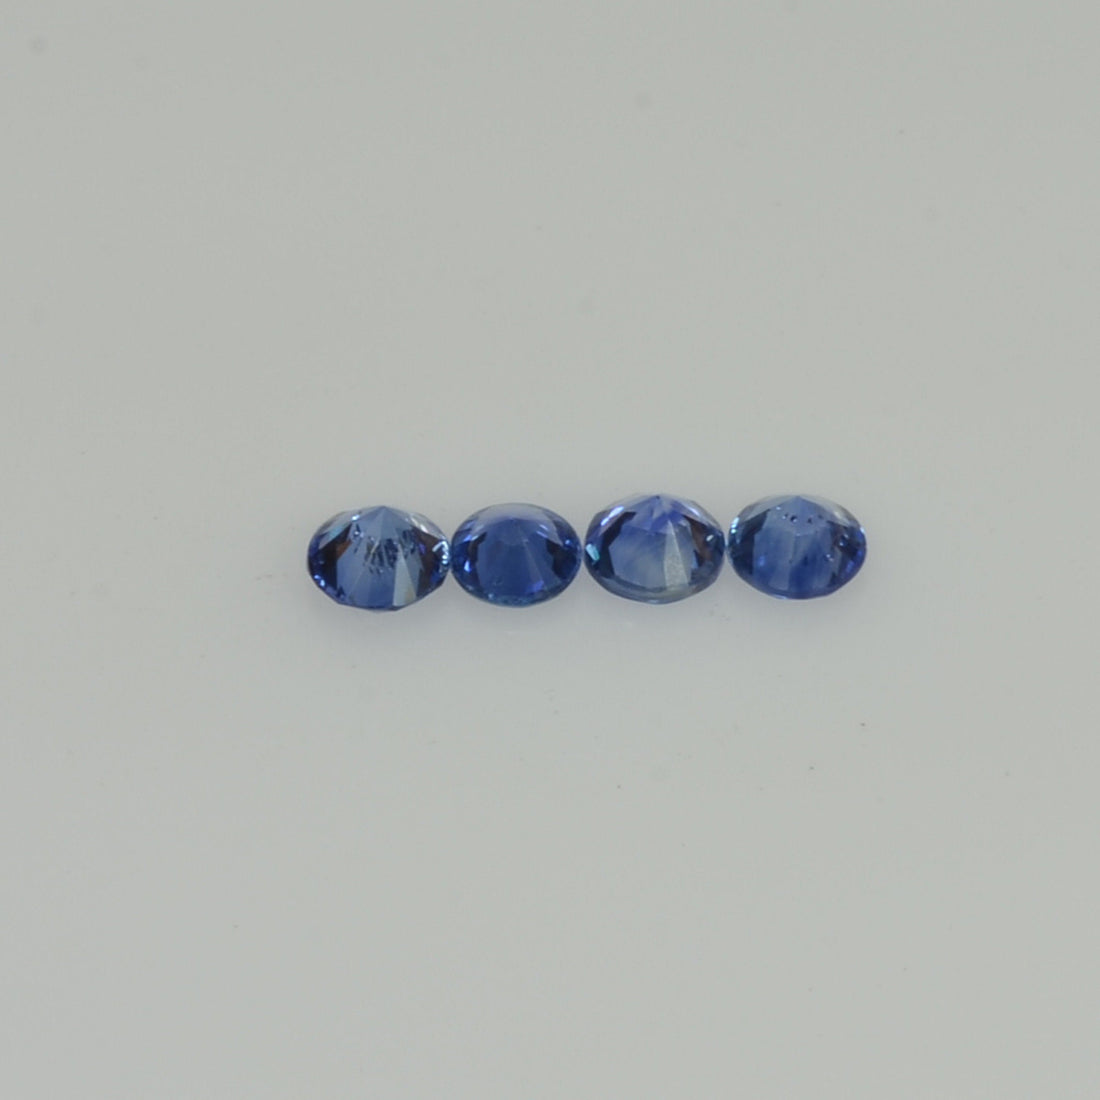 2.5-4.0 mm Natural Blue Sapphire Loose Gemstone Round Diamond Cut Vs Quality Color